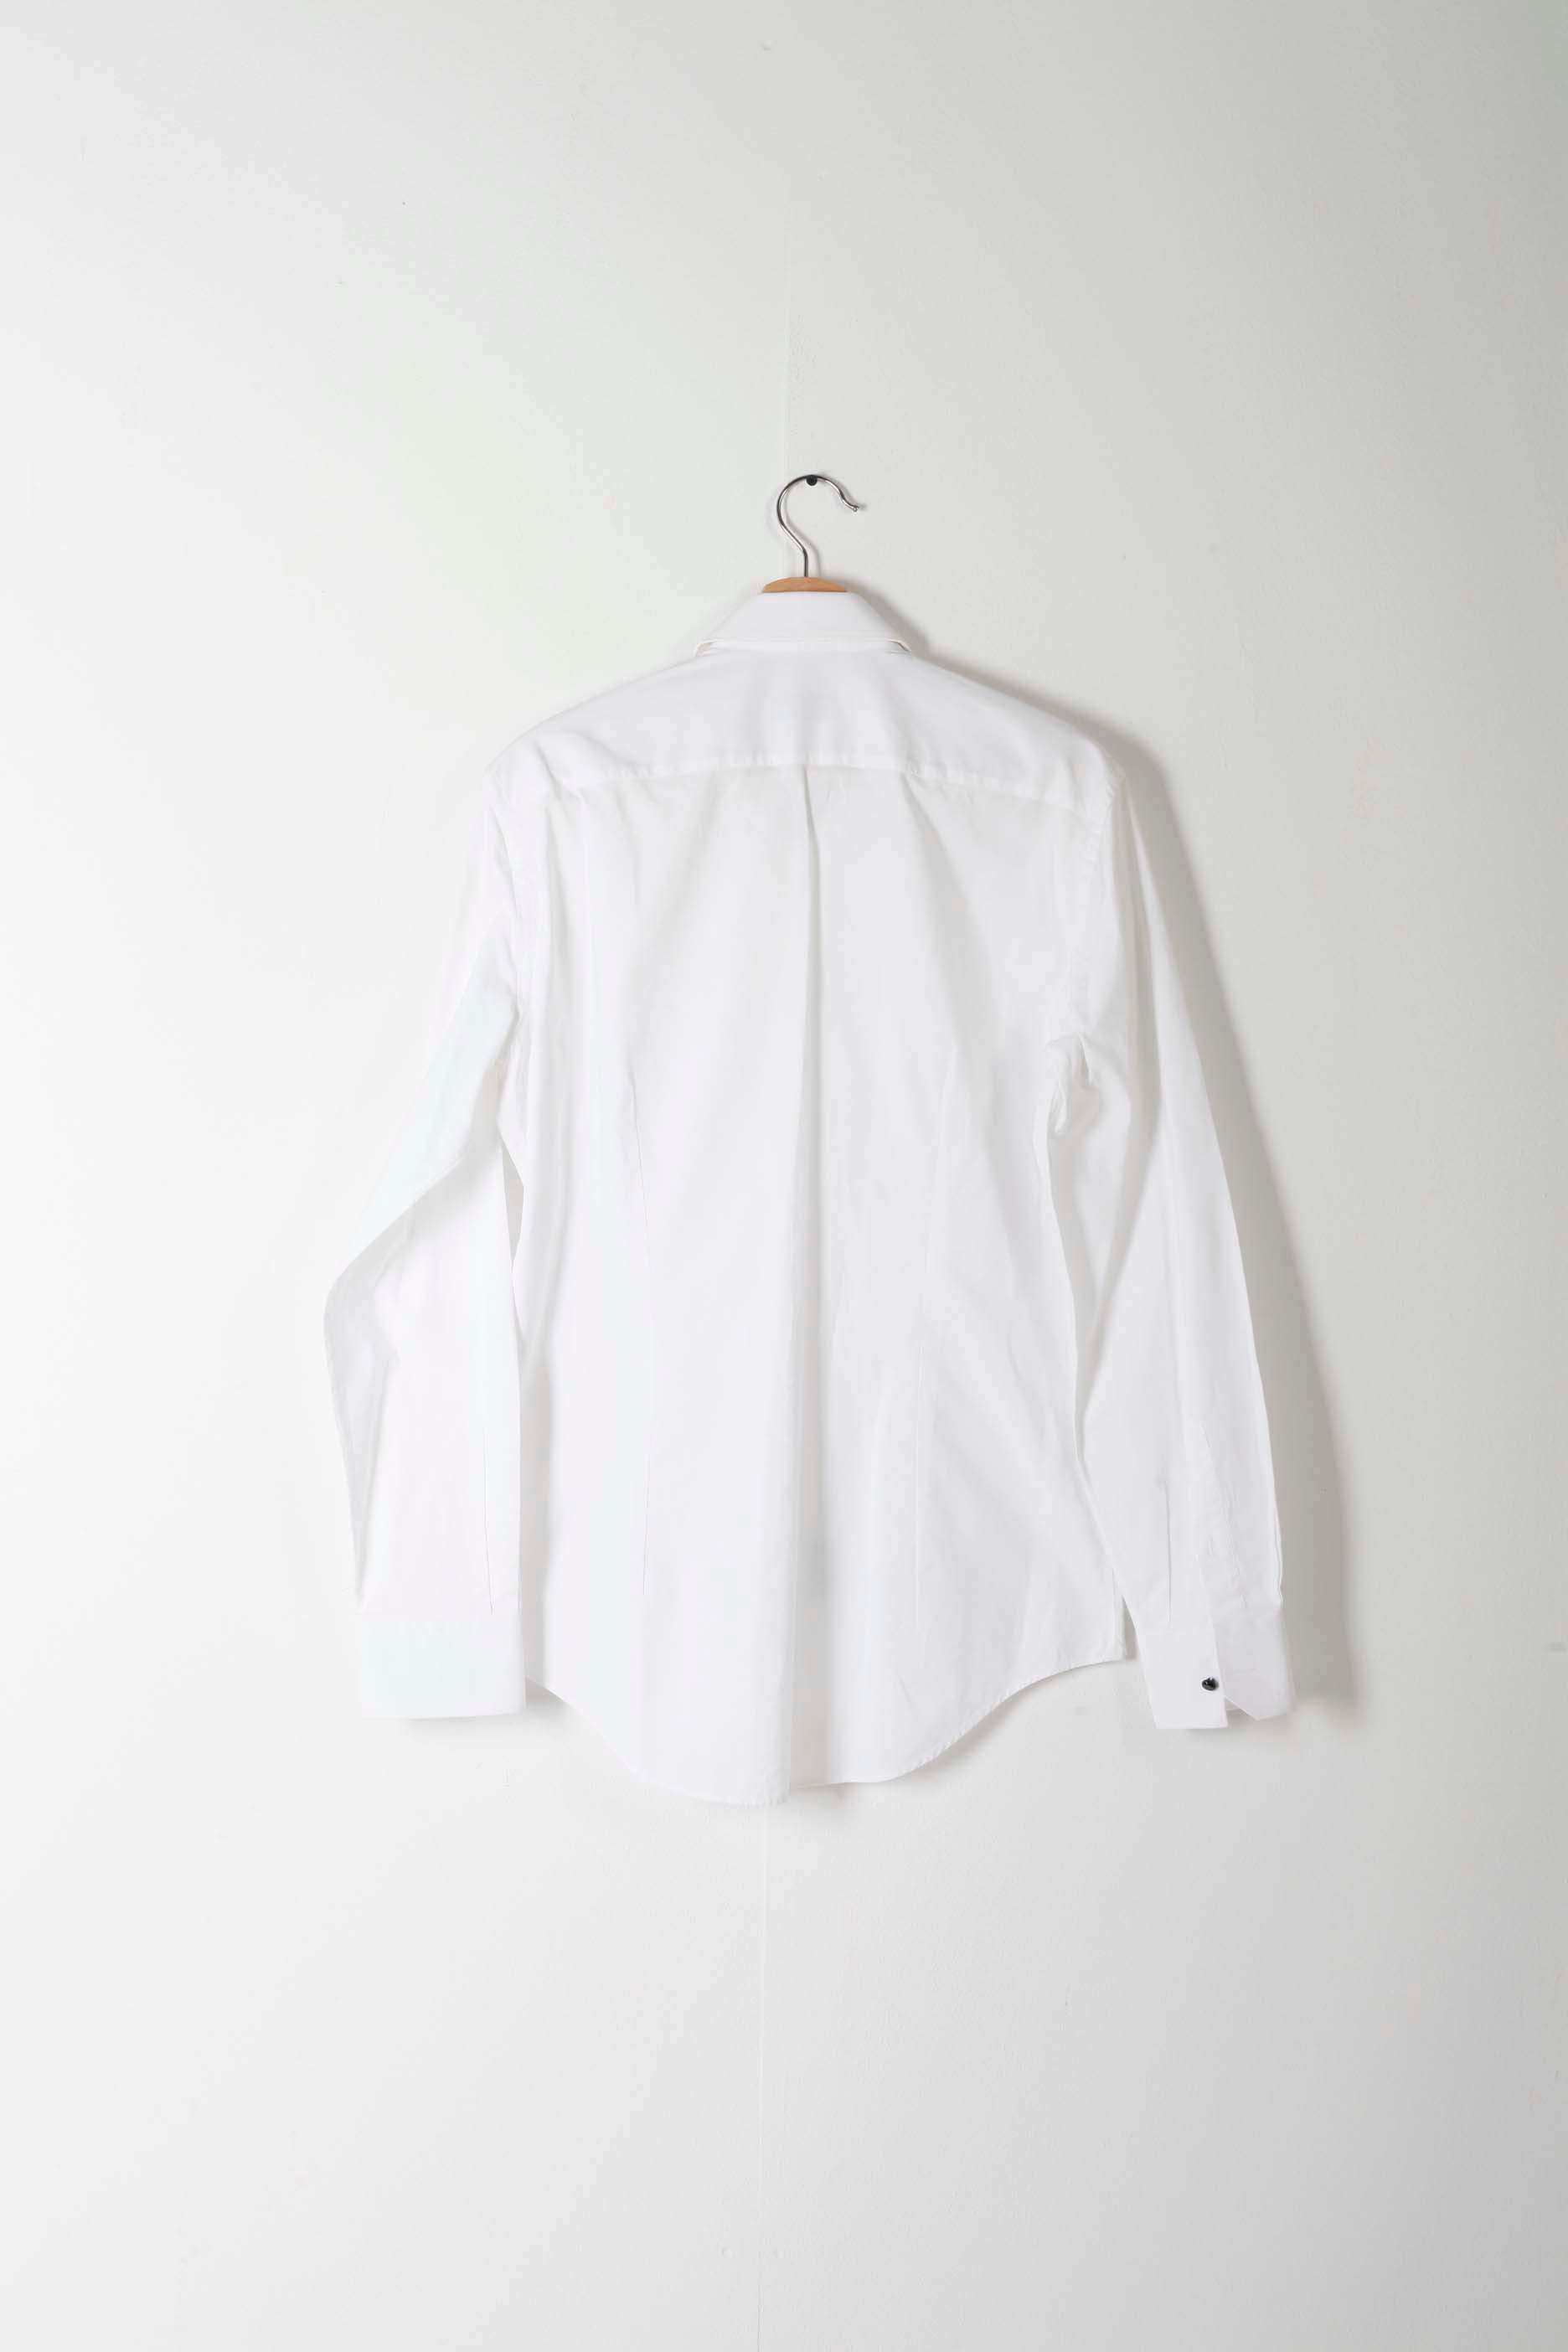 Premium Lanvin Designer White Tuxedo Shirt